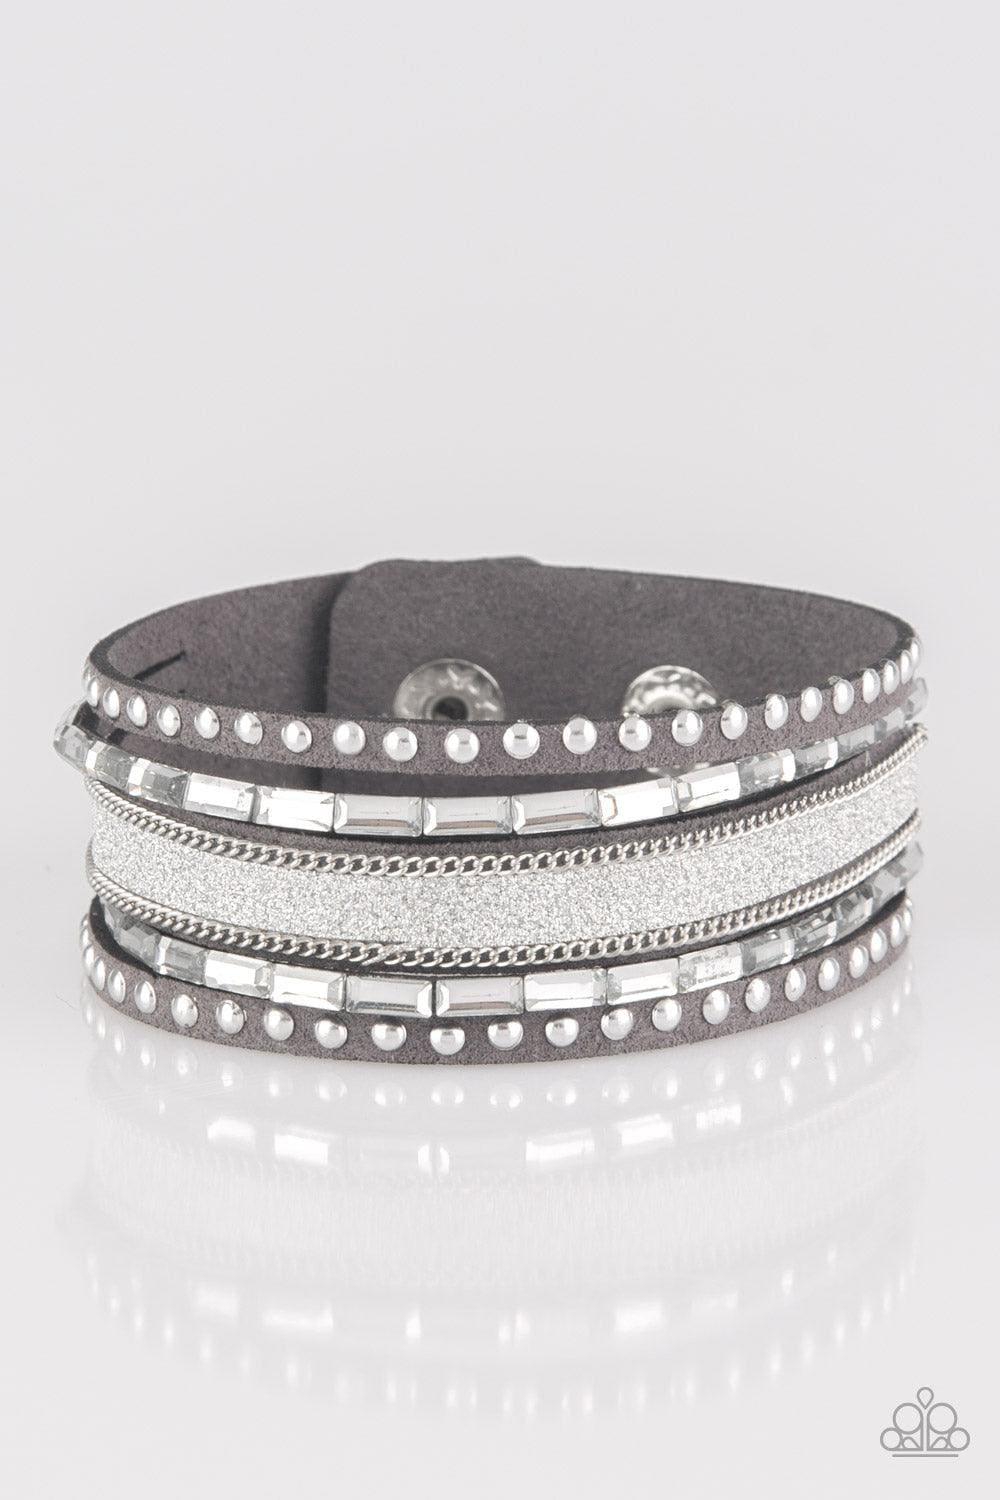 Paparazzi Accessories - Seize The Sass - Silver Snap Bracelet - Bling by JessieK